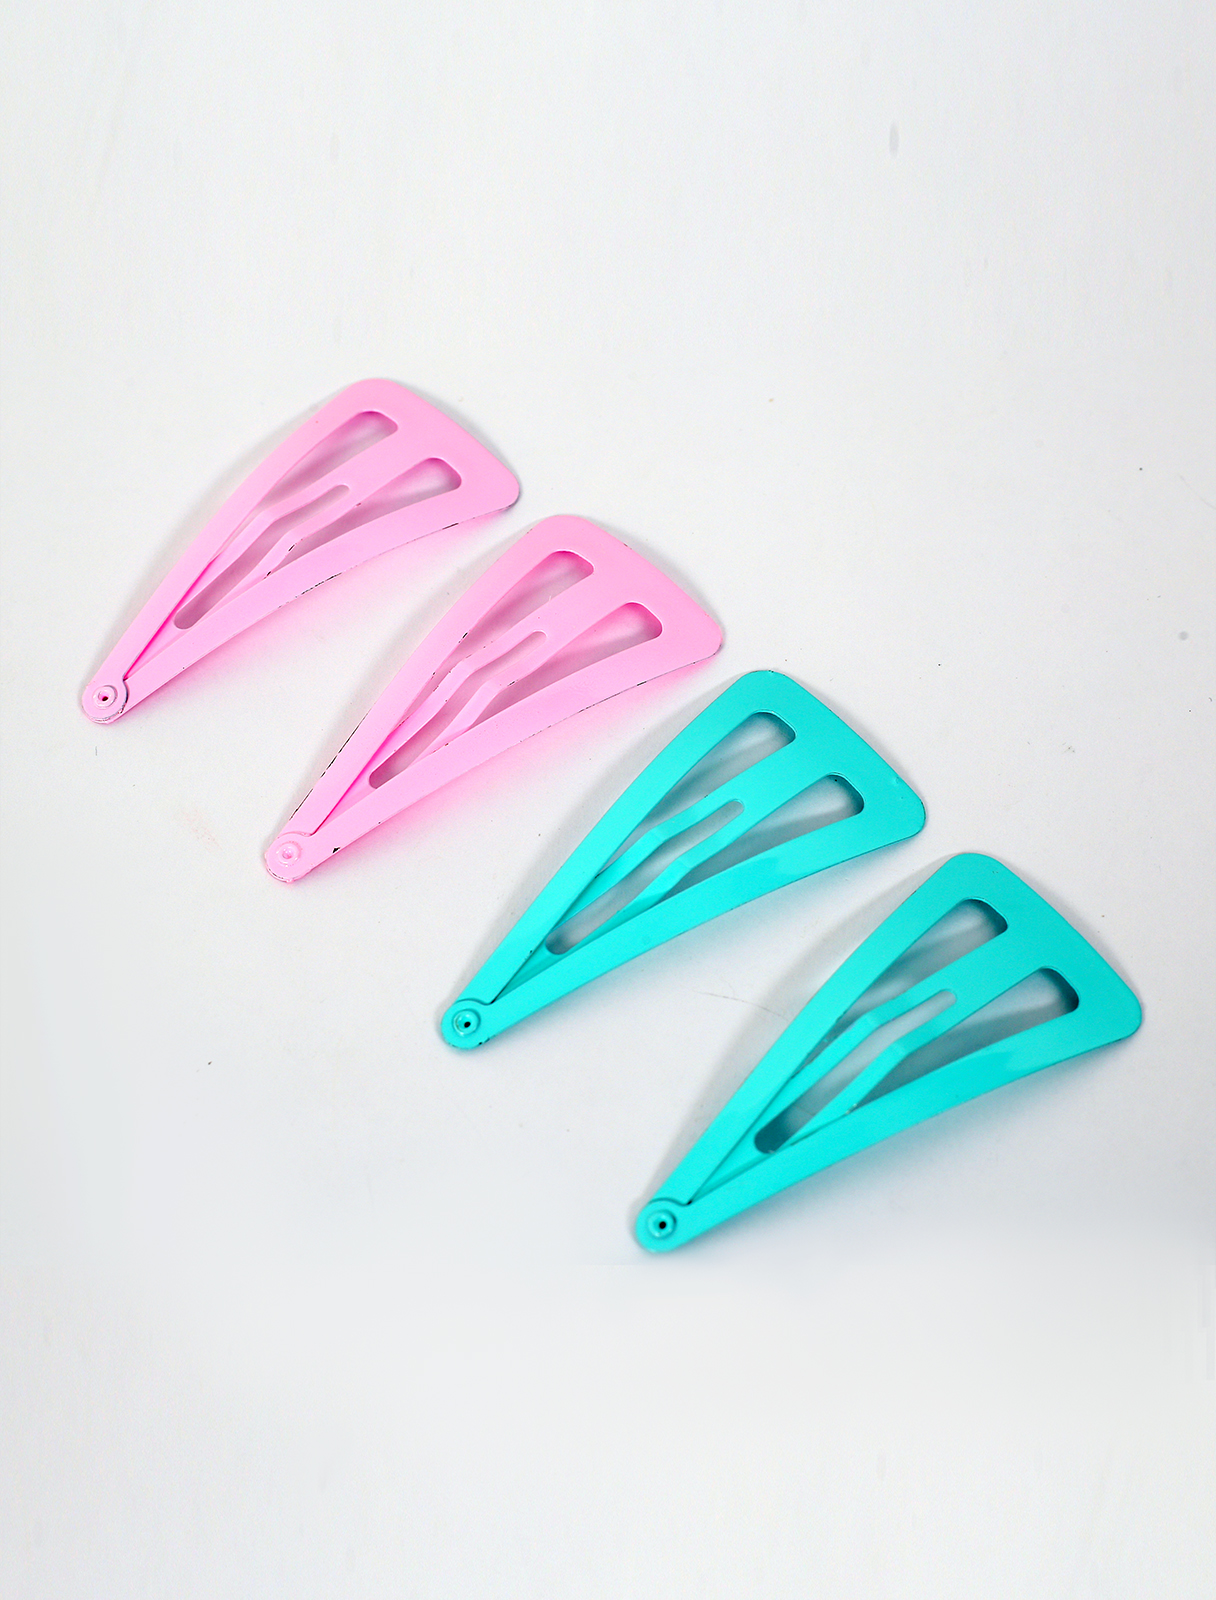 Metal pressure hair clip, 4 pieces, colors